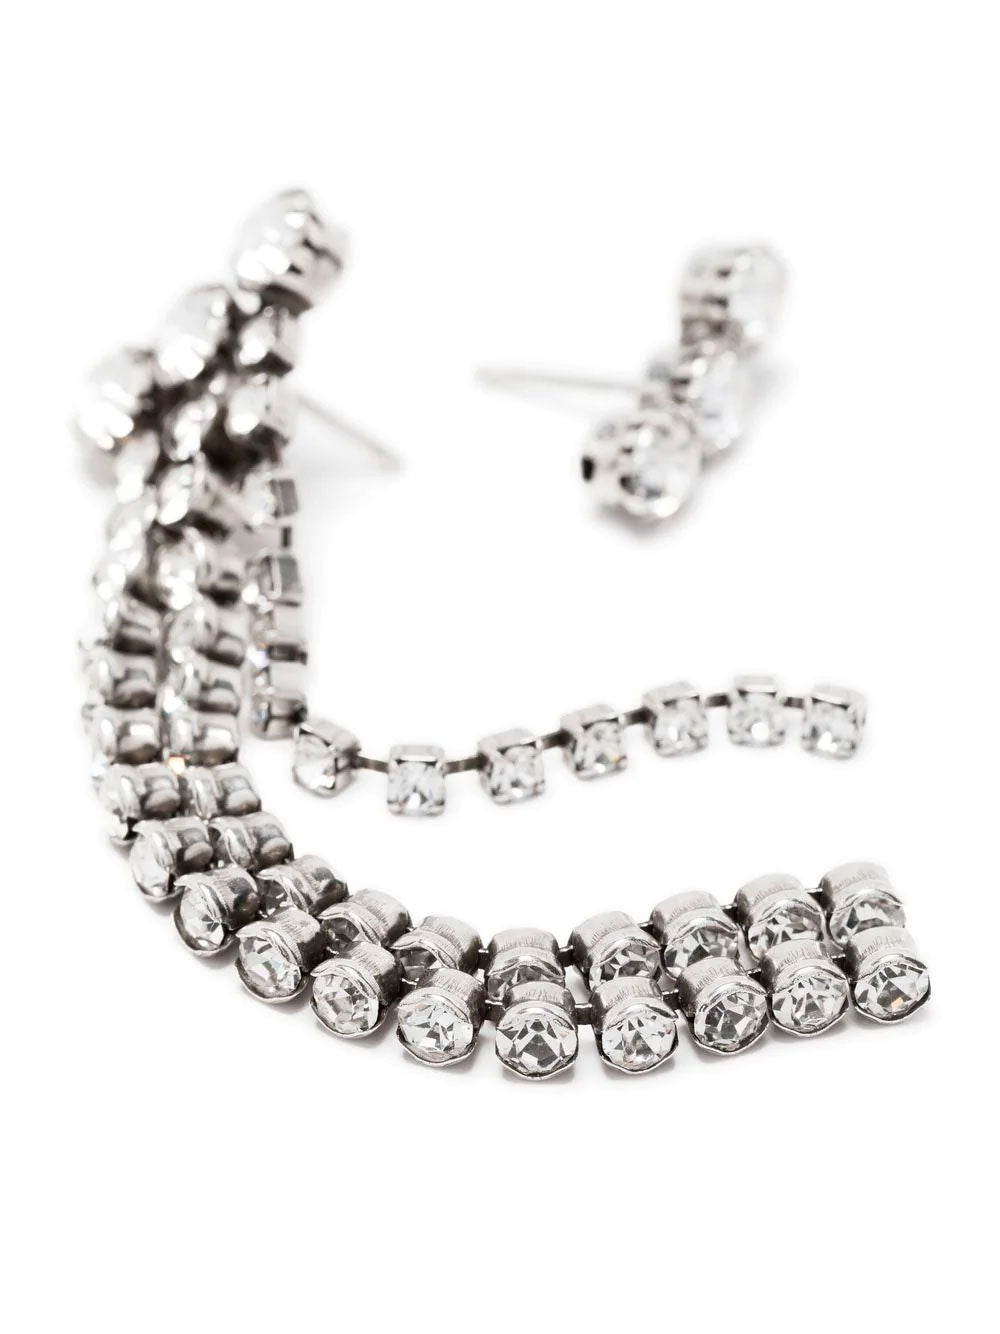 Isabel Marant silver-tone glass earrings.